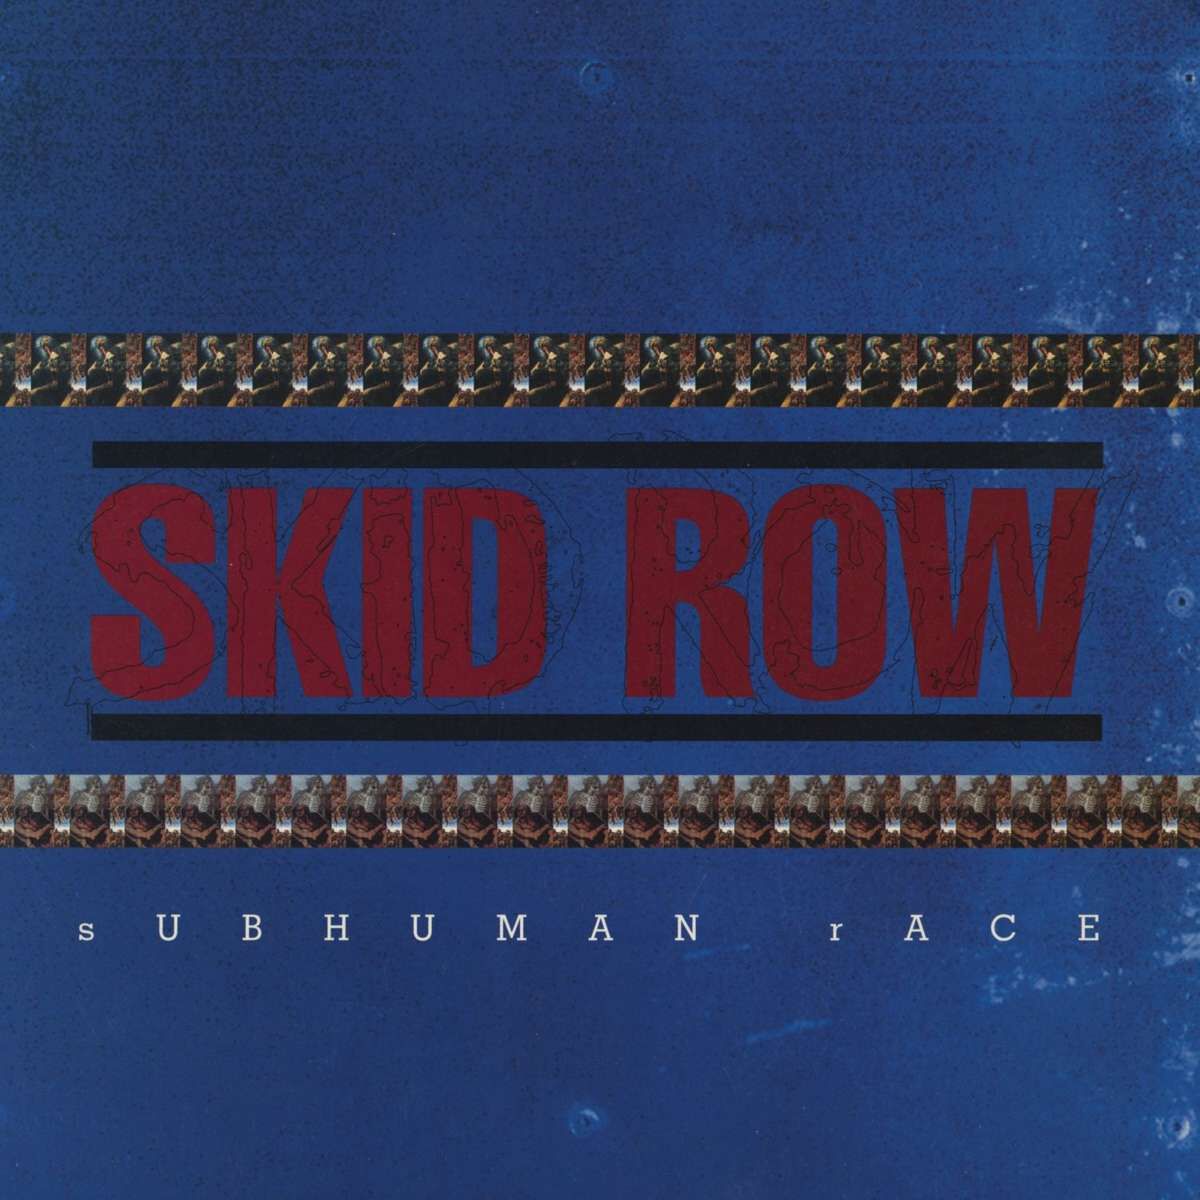 Subhuman race von Skid Row - 2-LP (Coloured, Limited Edition, Standard)